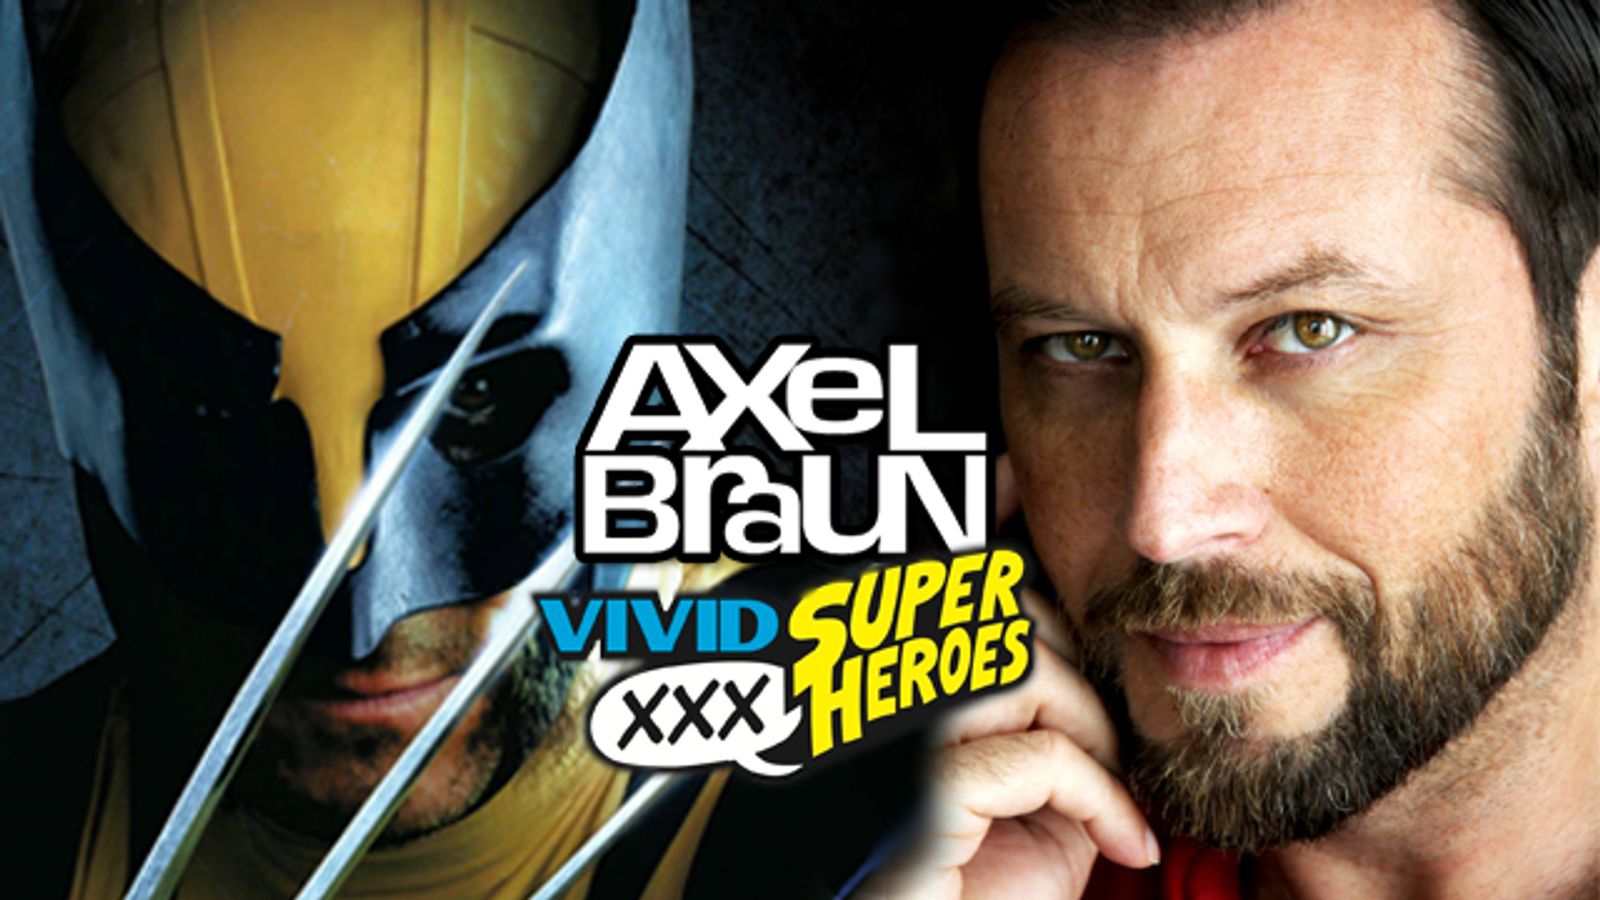 Axel Braun’s ‘Wolverine XXX’ on Vivid.com Today, Streets Sept. 10